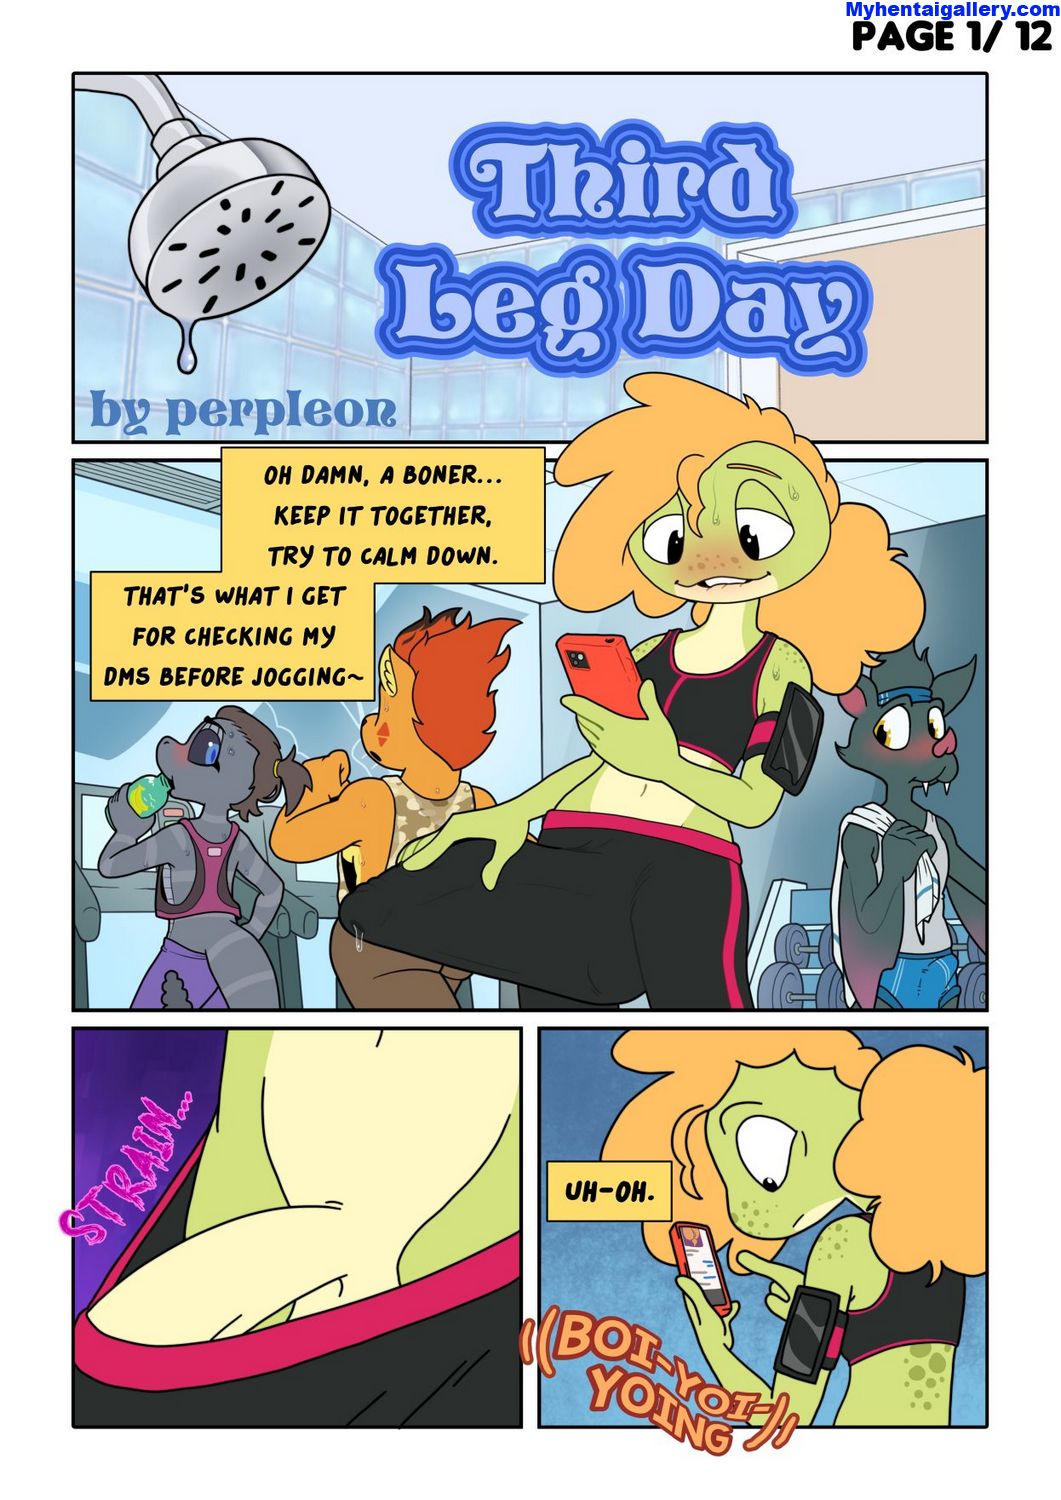 Cover Third Leg Day